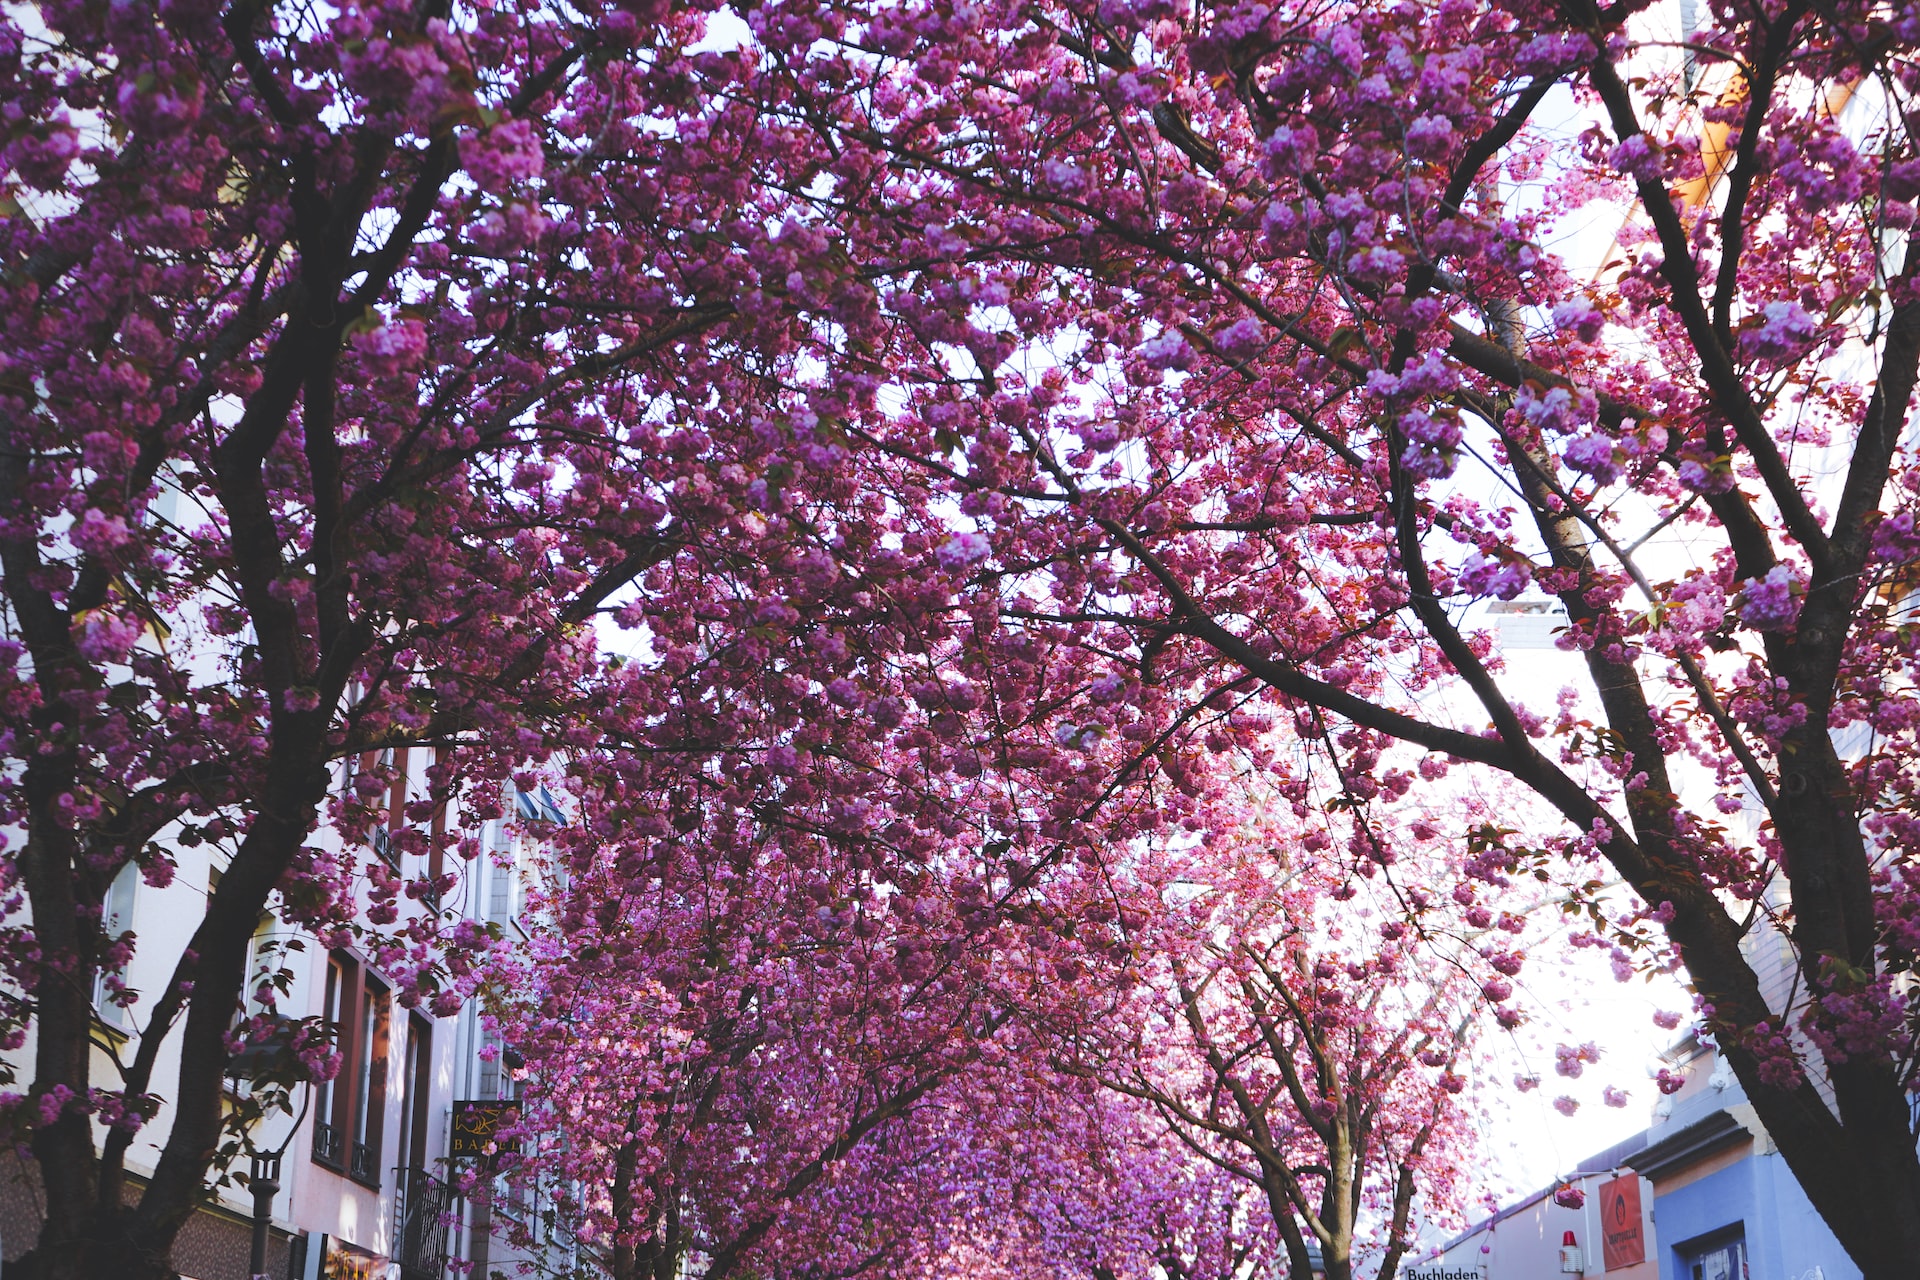 Cherry blossom alley in Bonn, Germany.